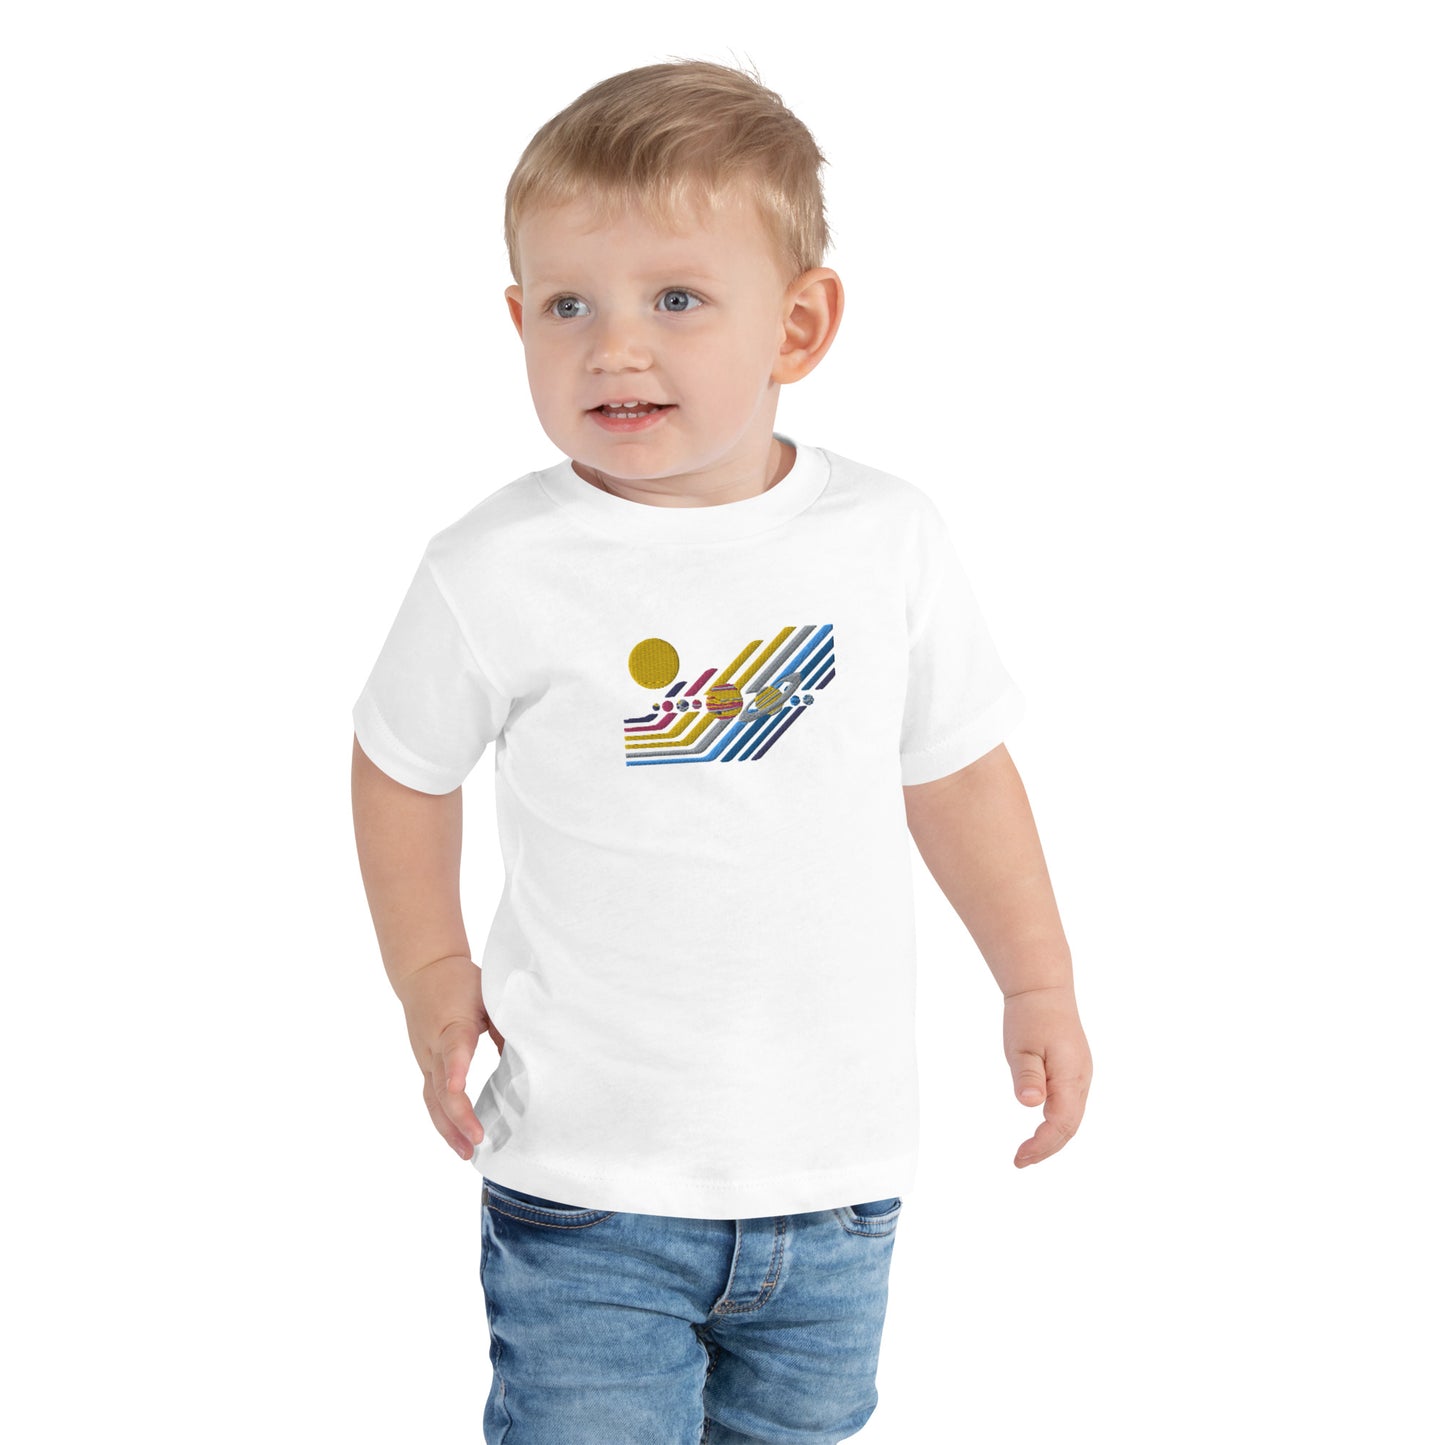 Solar System Toddler Short Sleeve Tee shirt